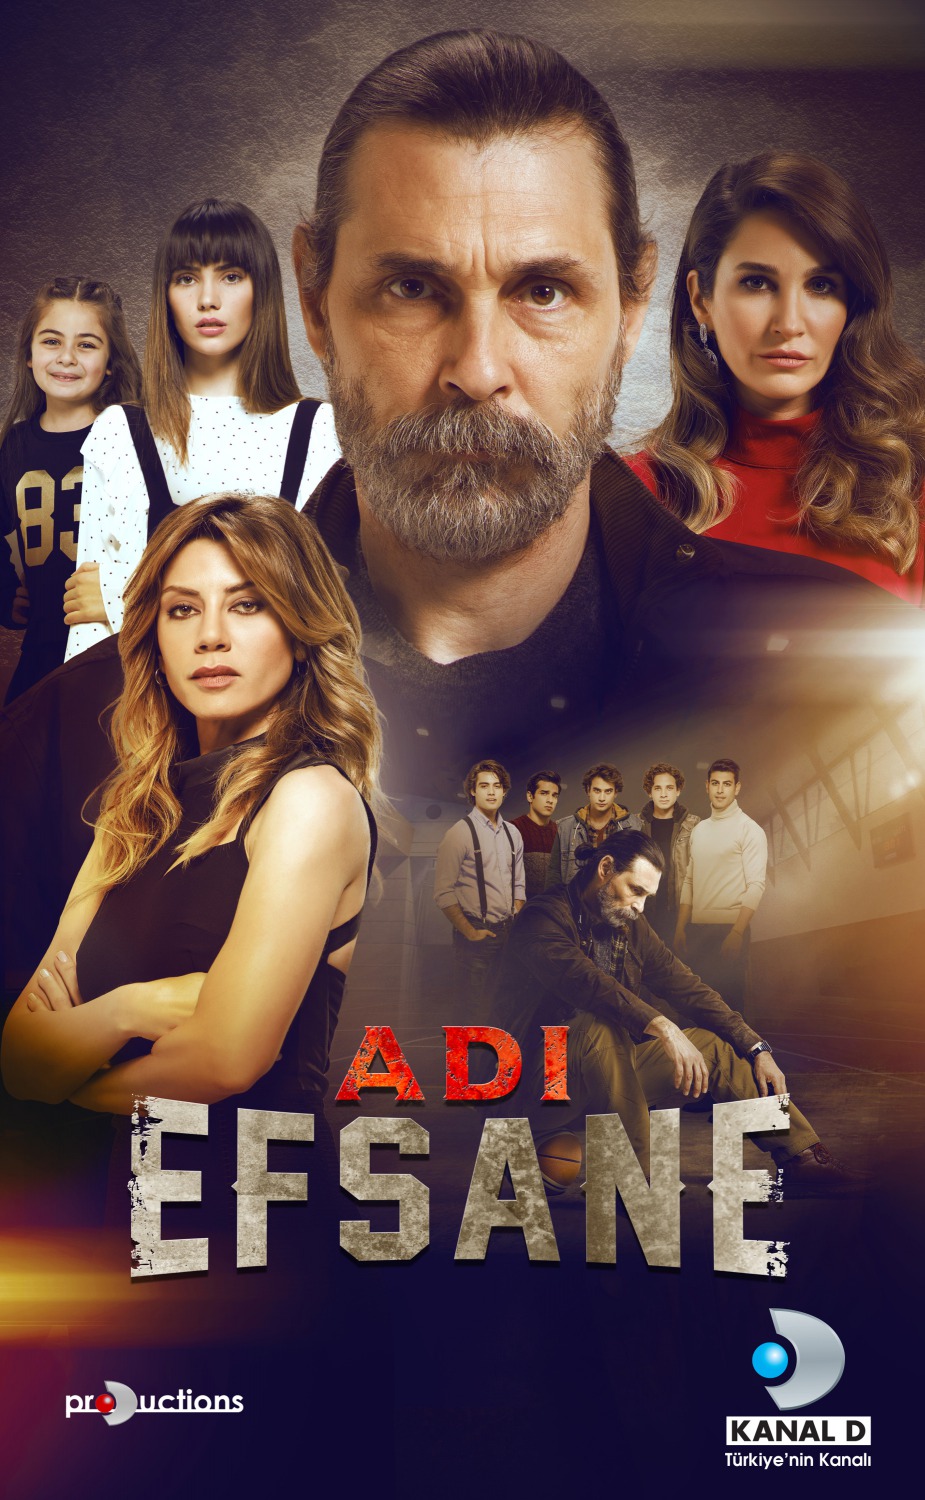 Extra Large TV Poster Image for Adi Efsane 